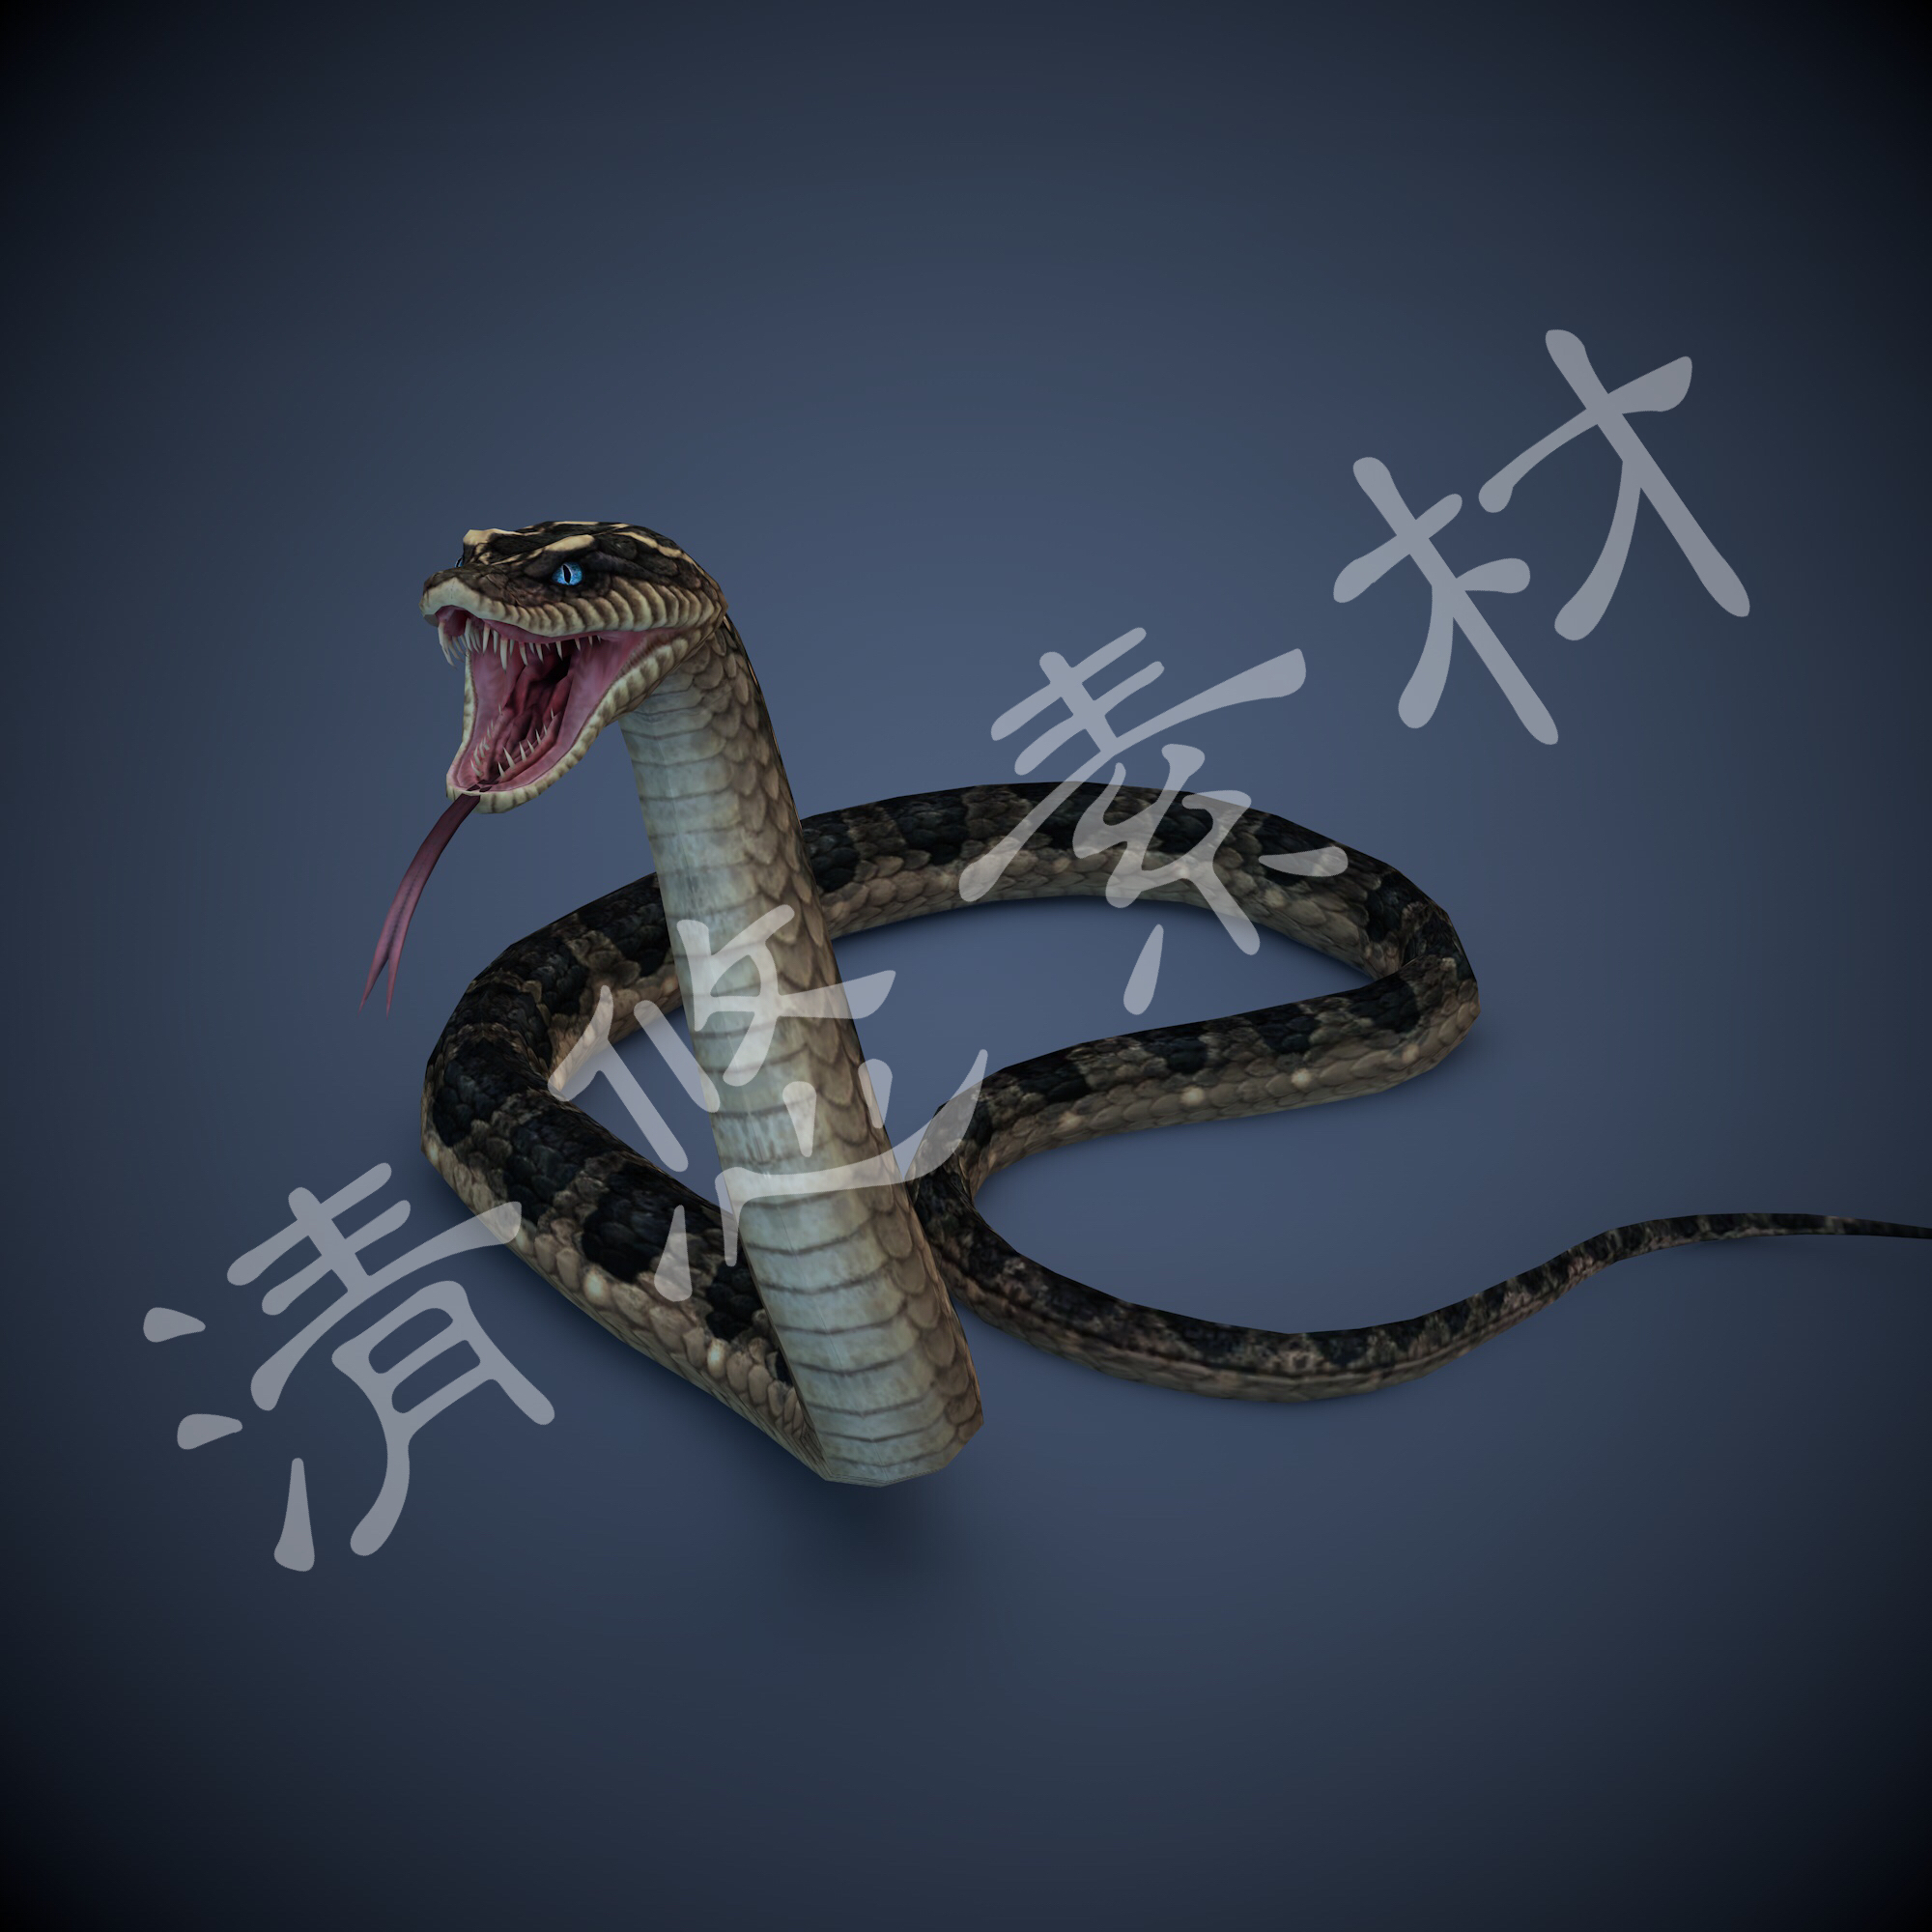 3dmax c4d蛇模型 爬行动物 毒蛇 虫类骨骼绑定动画fbx格式 269